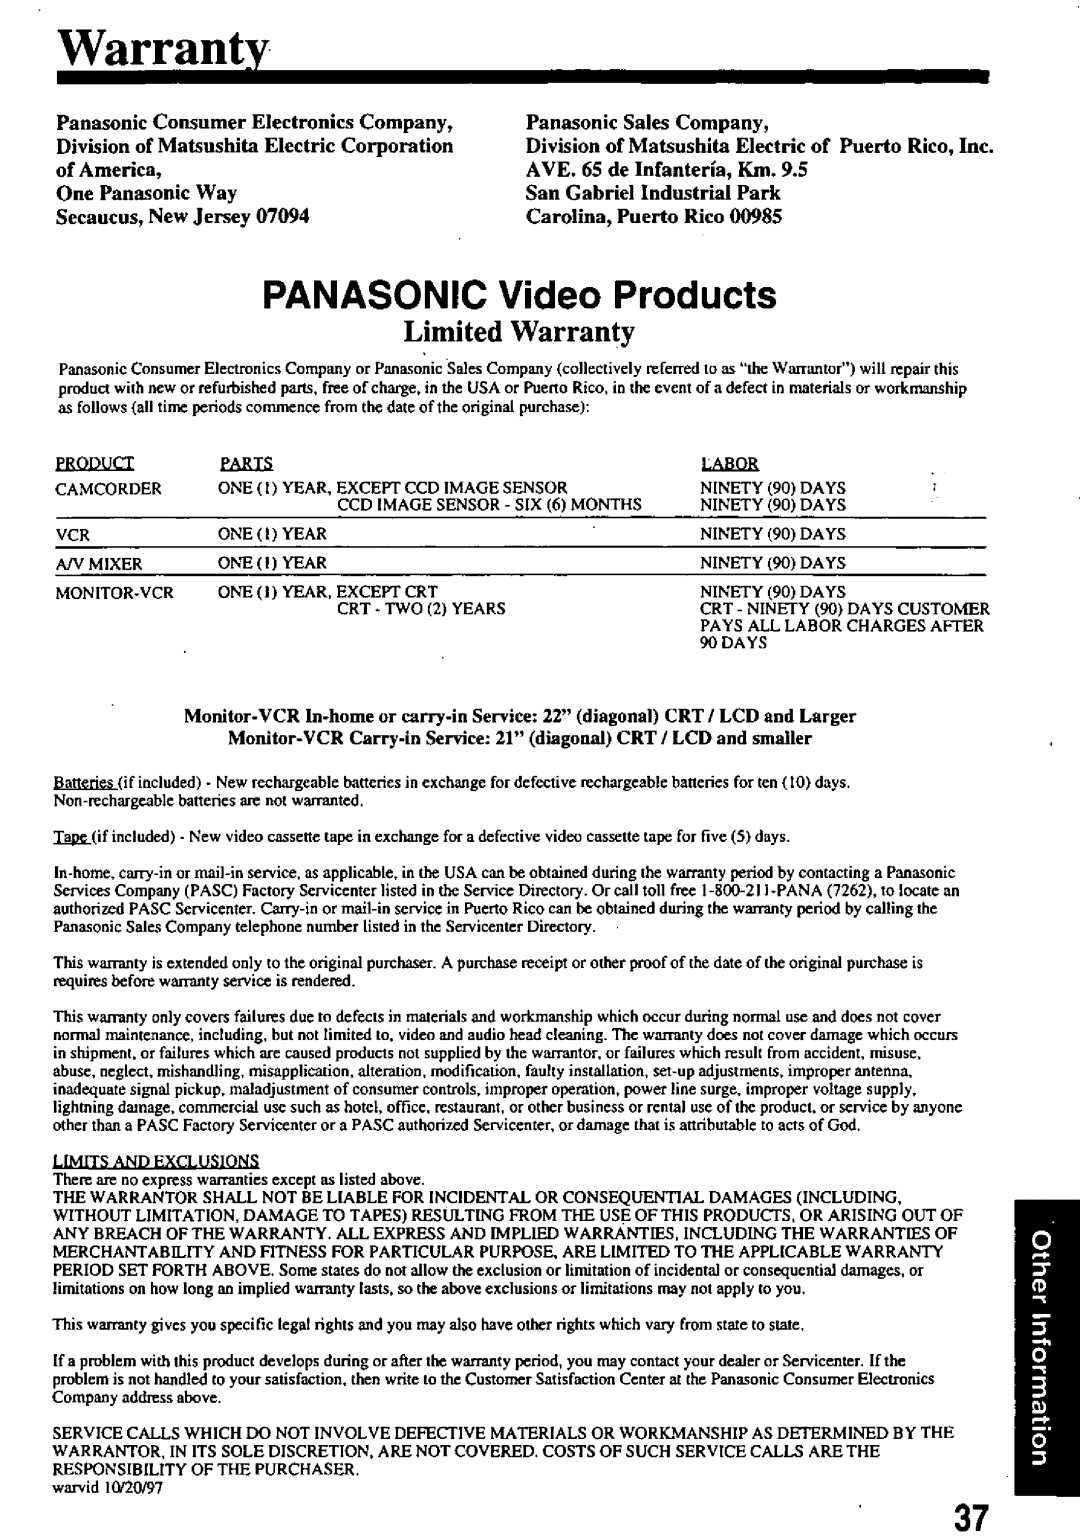 Panasonic PV-8661 manual 